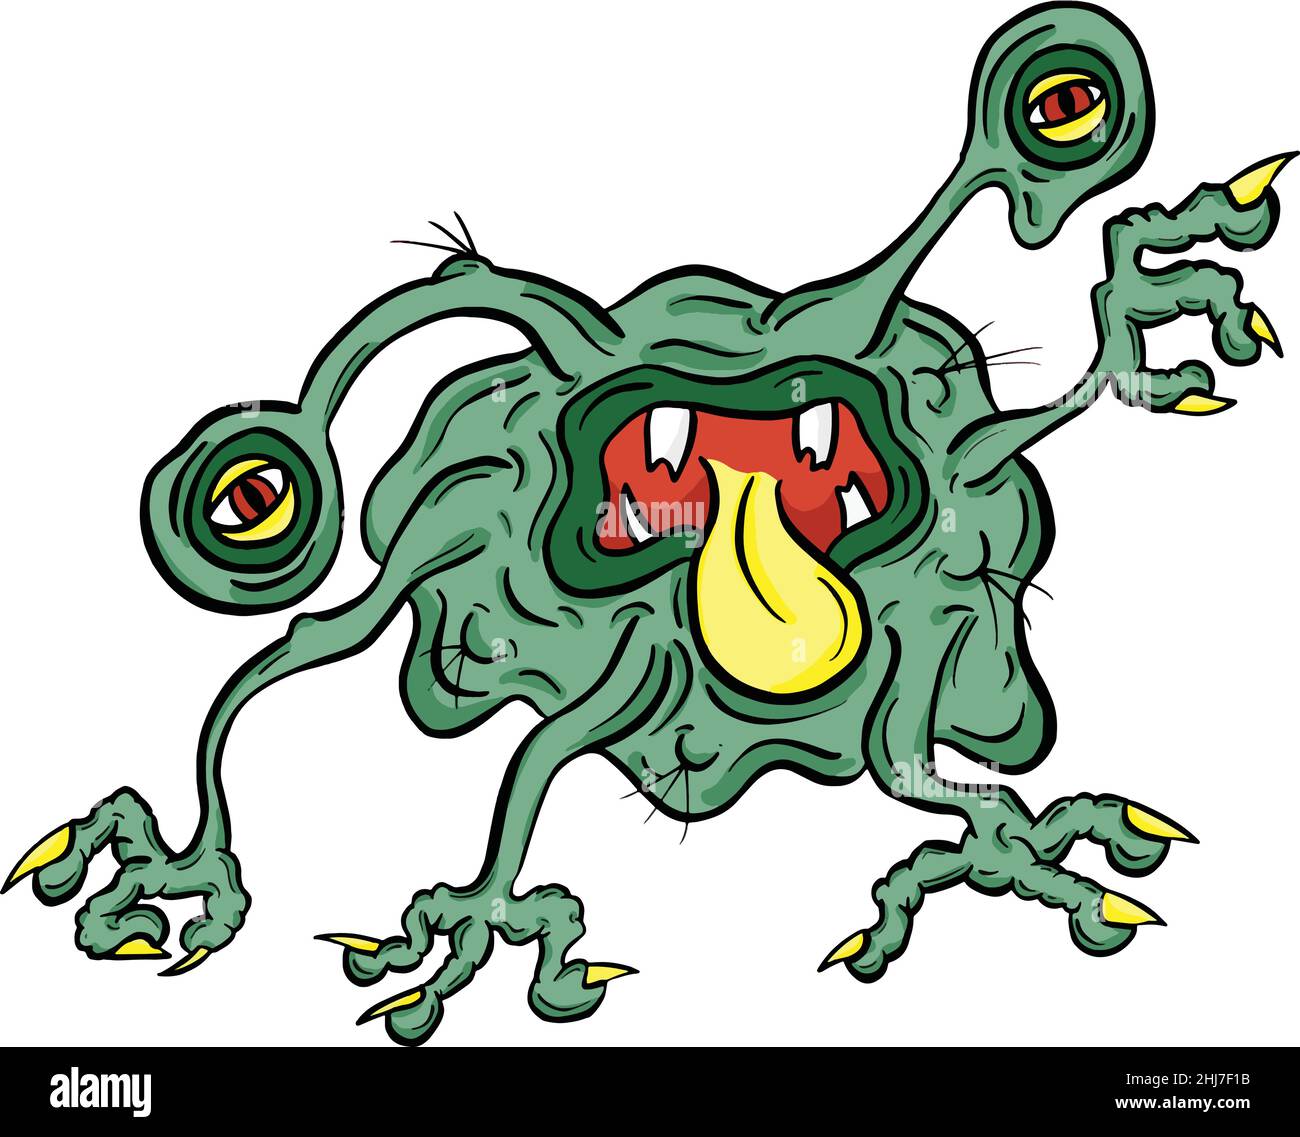 Extrañas criaturas imaginarias de monstruos alienígenas que parecen virus o  parásitos en un estilo de dibujos animados Imagen Vector de stock - Alamy